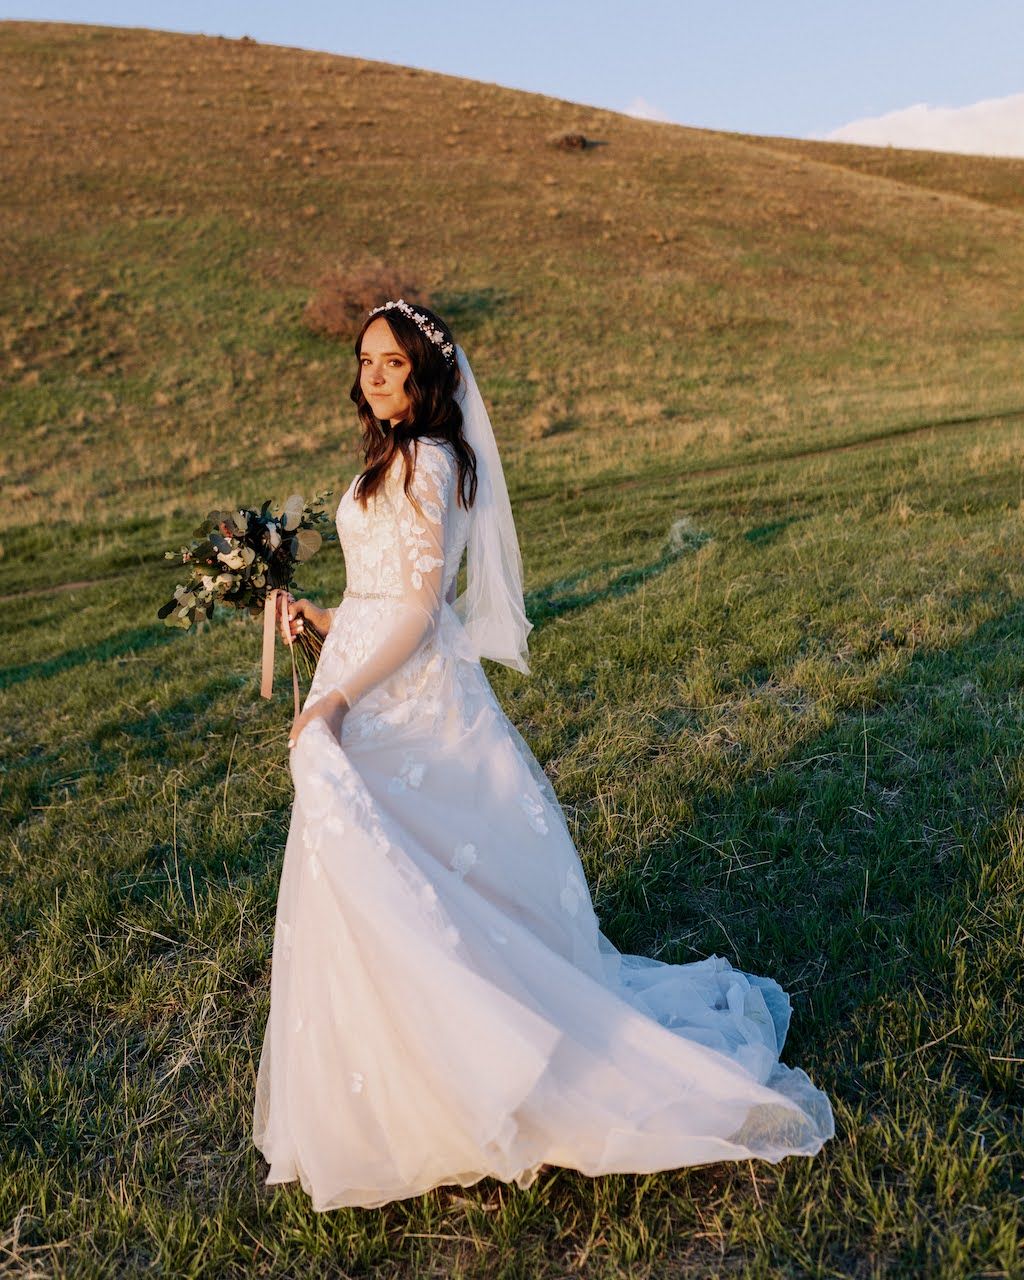 bride in lace wedding dress